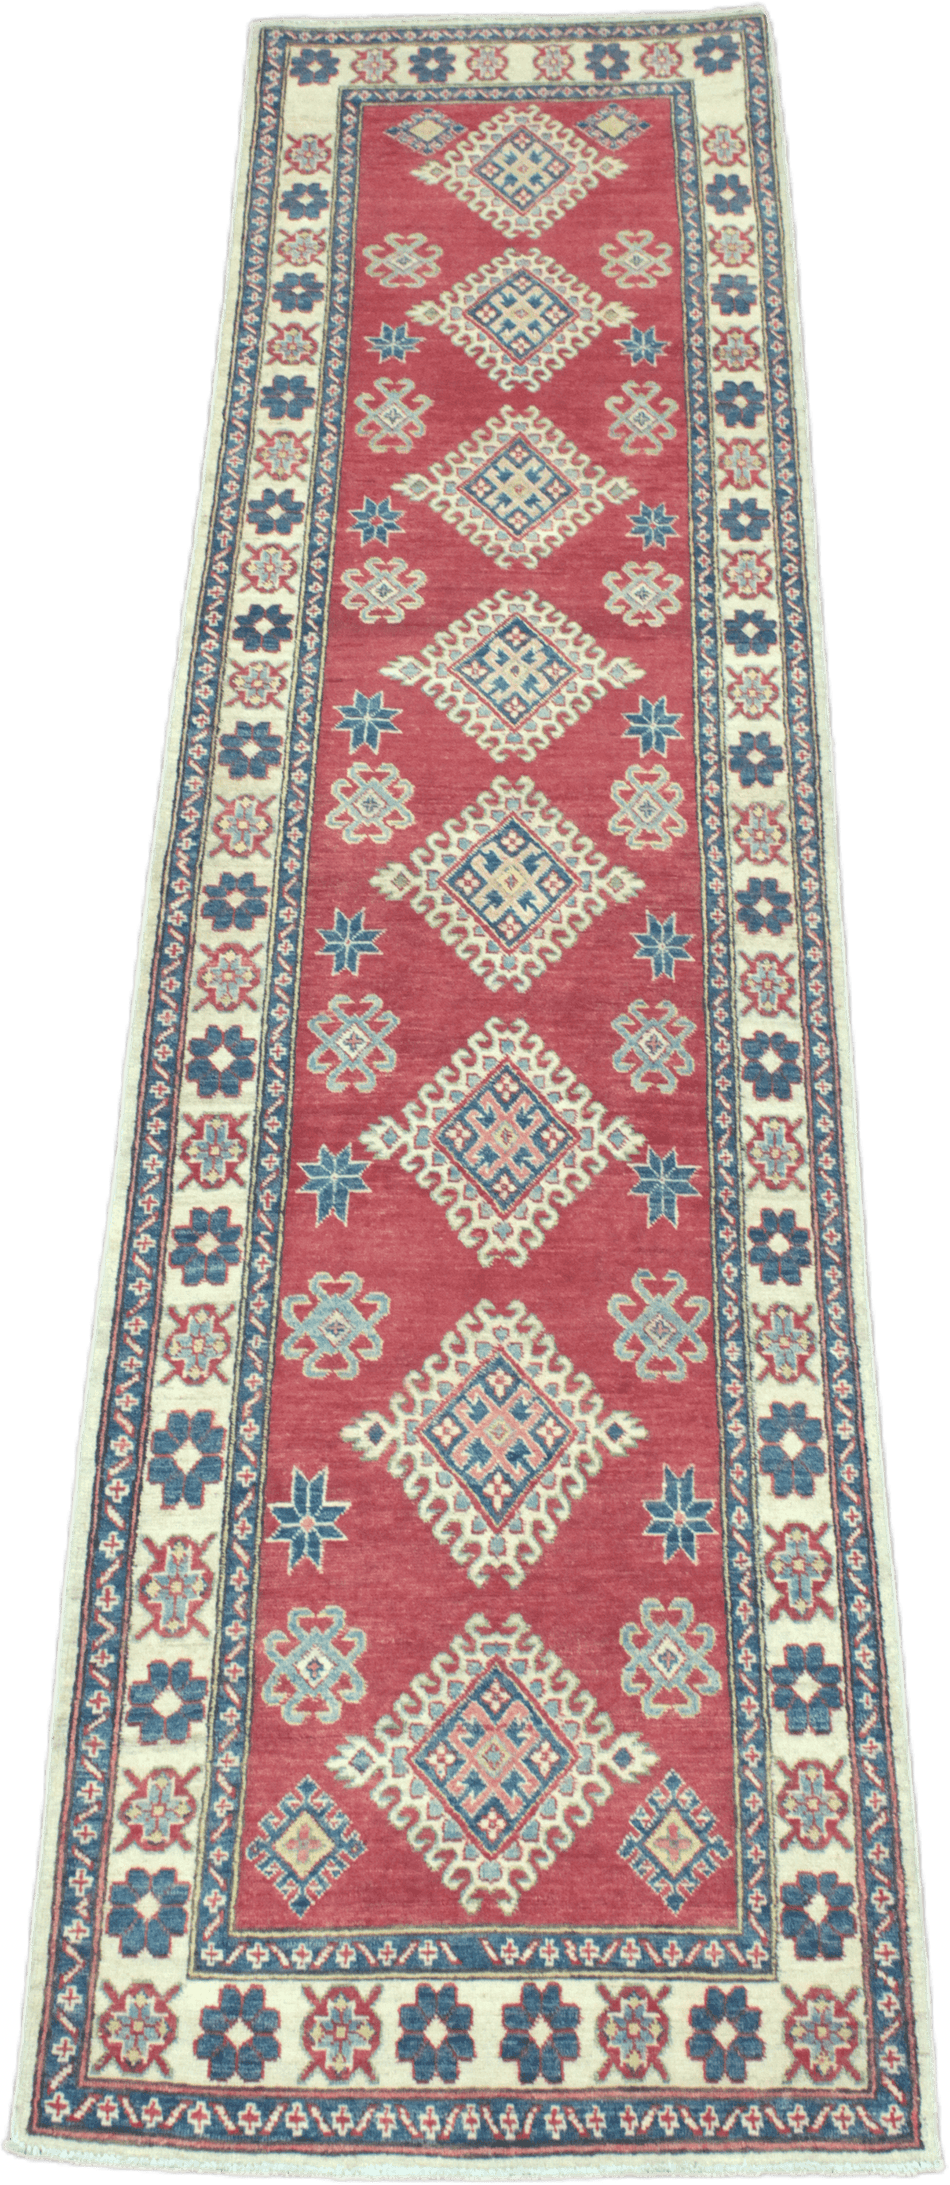 Kazak Rug  - 336 cm x 86 cm